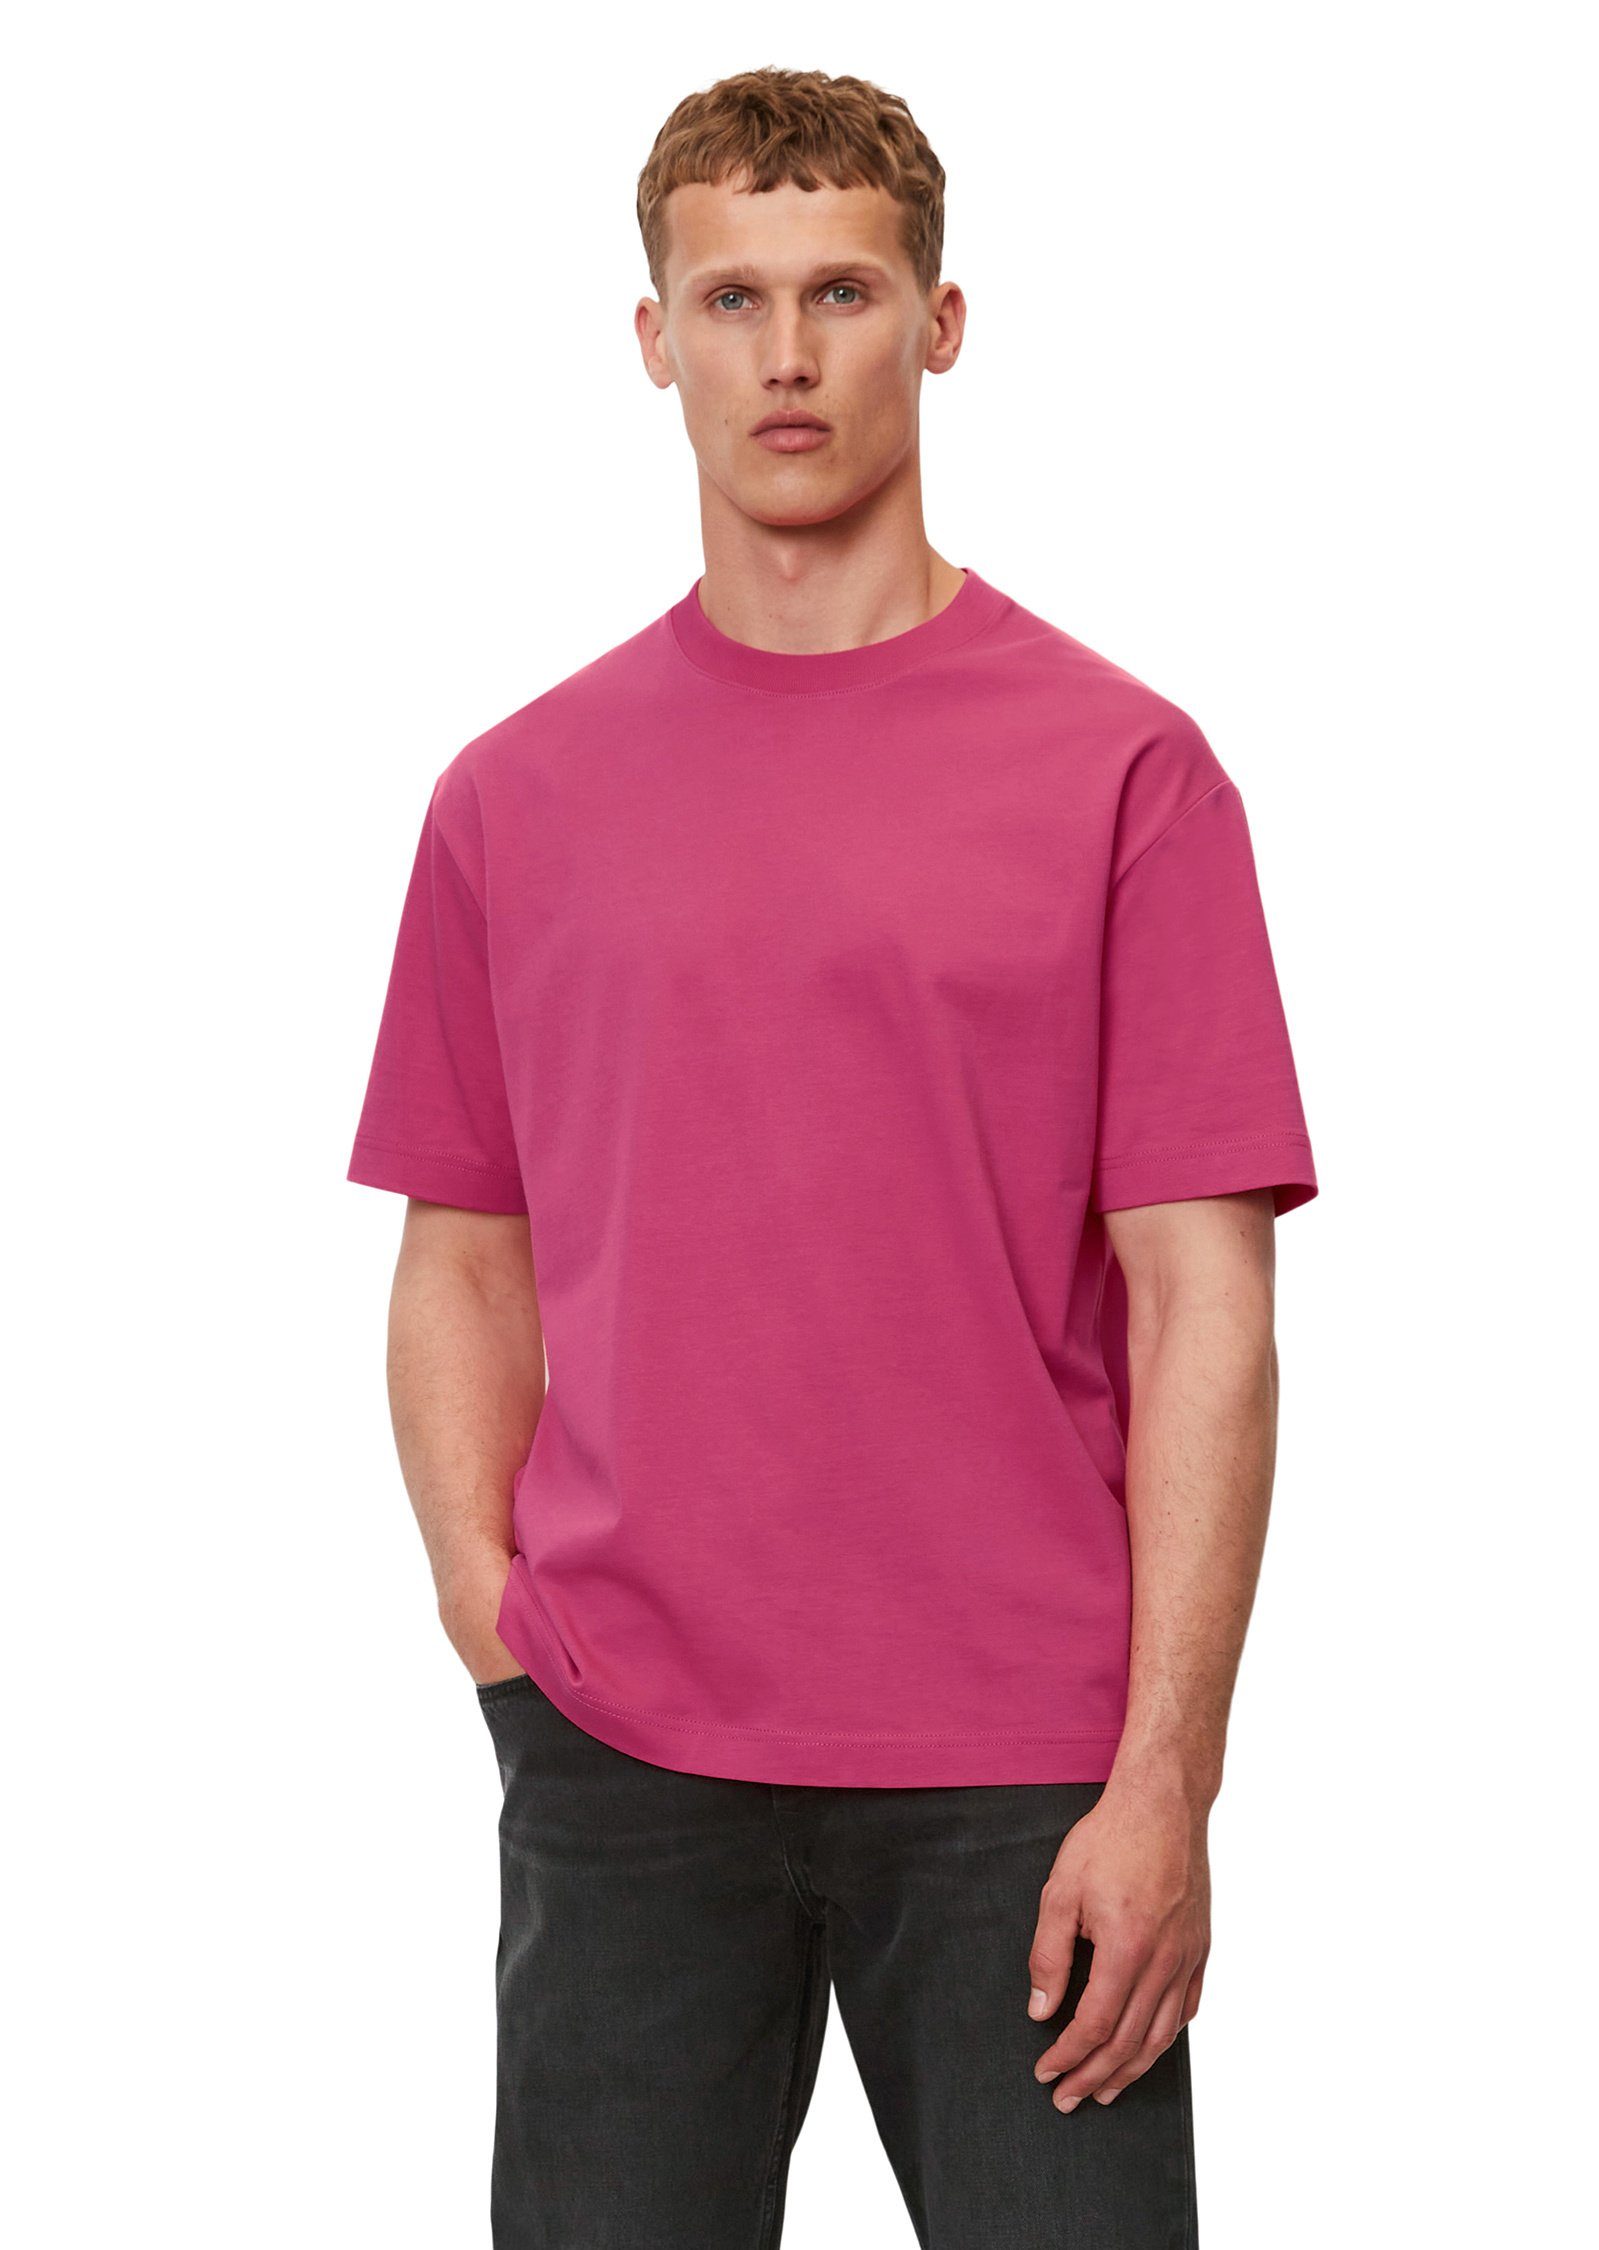 Marc O'Polo T-Shirt aus schwerem Heavy-Jersey dunkellila